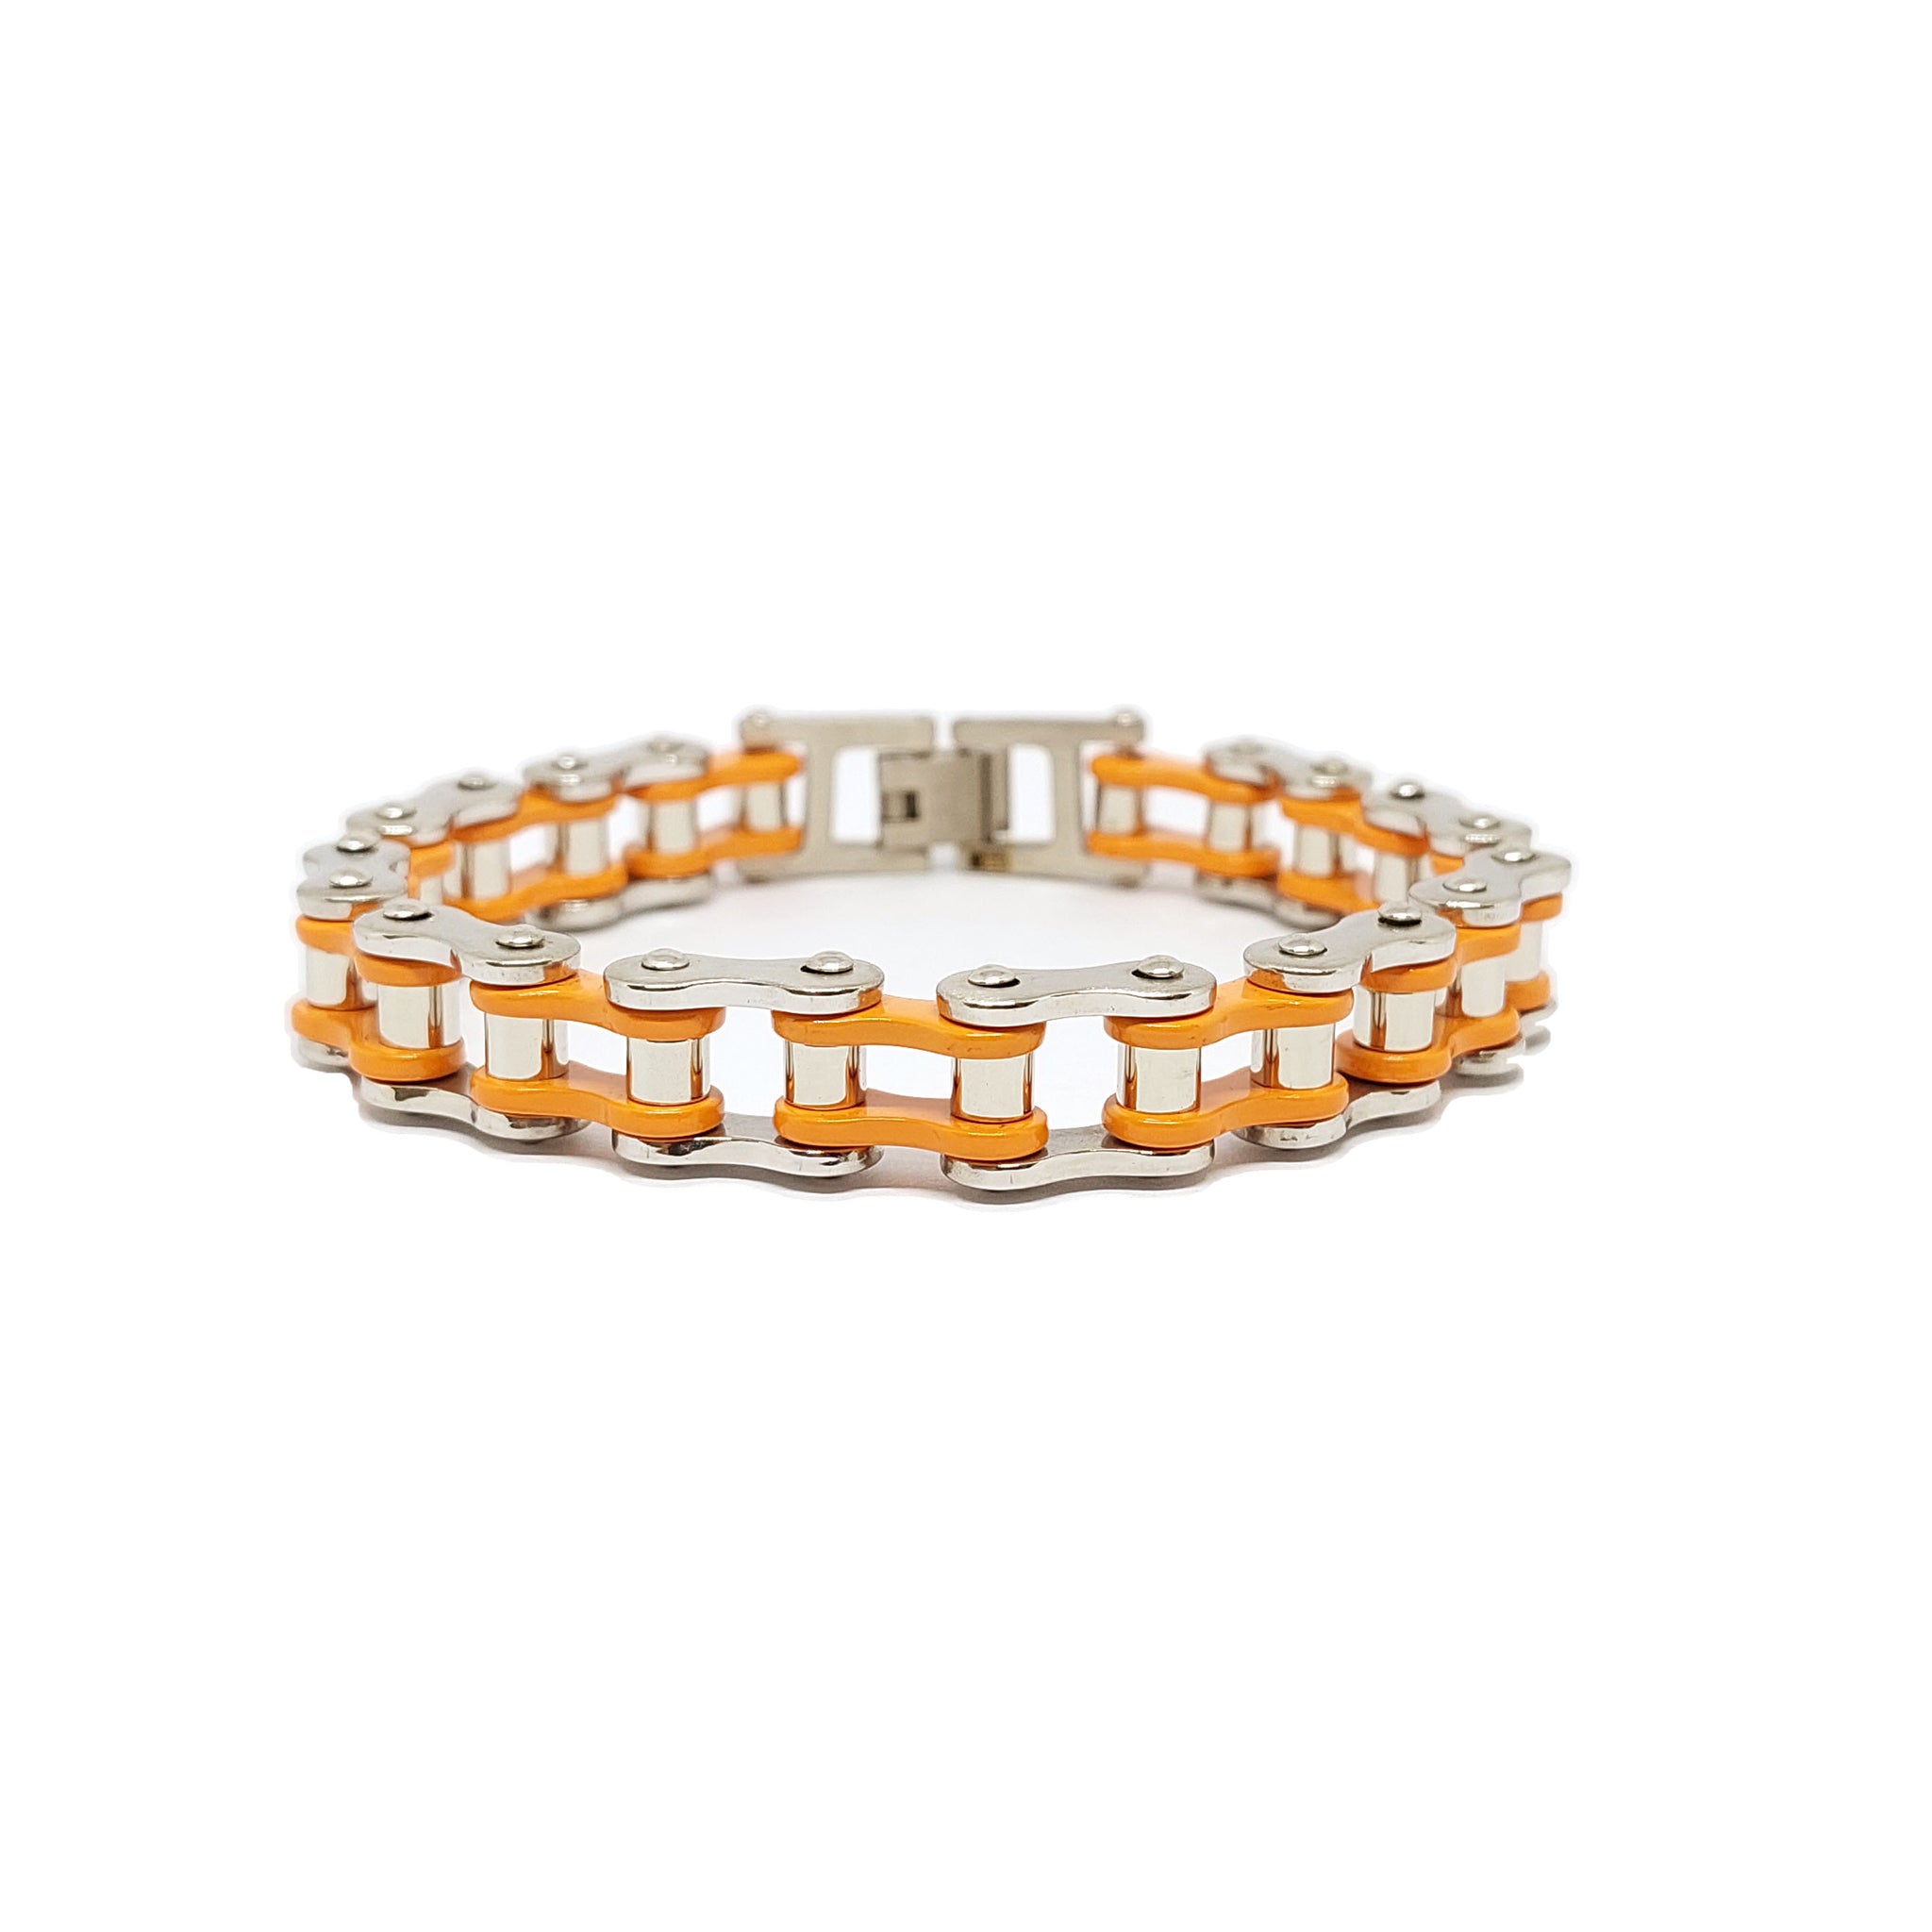 ESBL 7974: Bicycle Chain Bracelet w/ Orange Accents